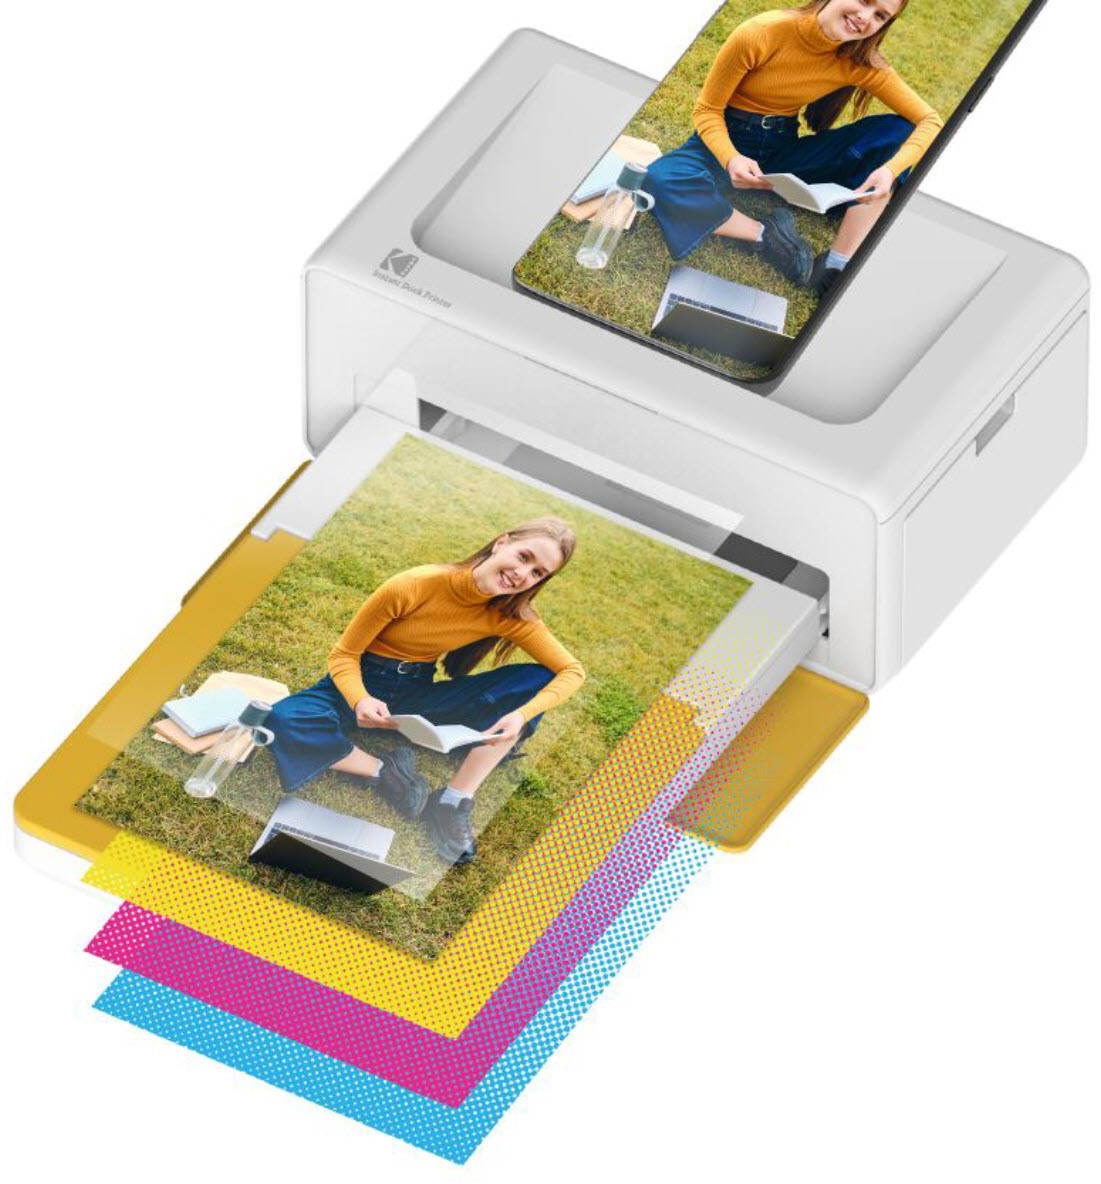 KODAK Post Card Size Photo Printer KOPRIP460 Yellow